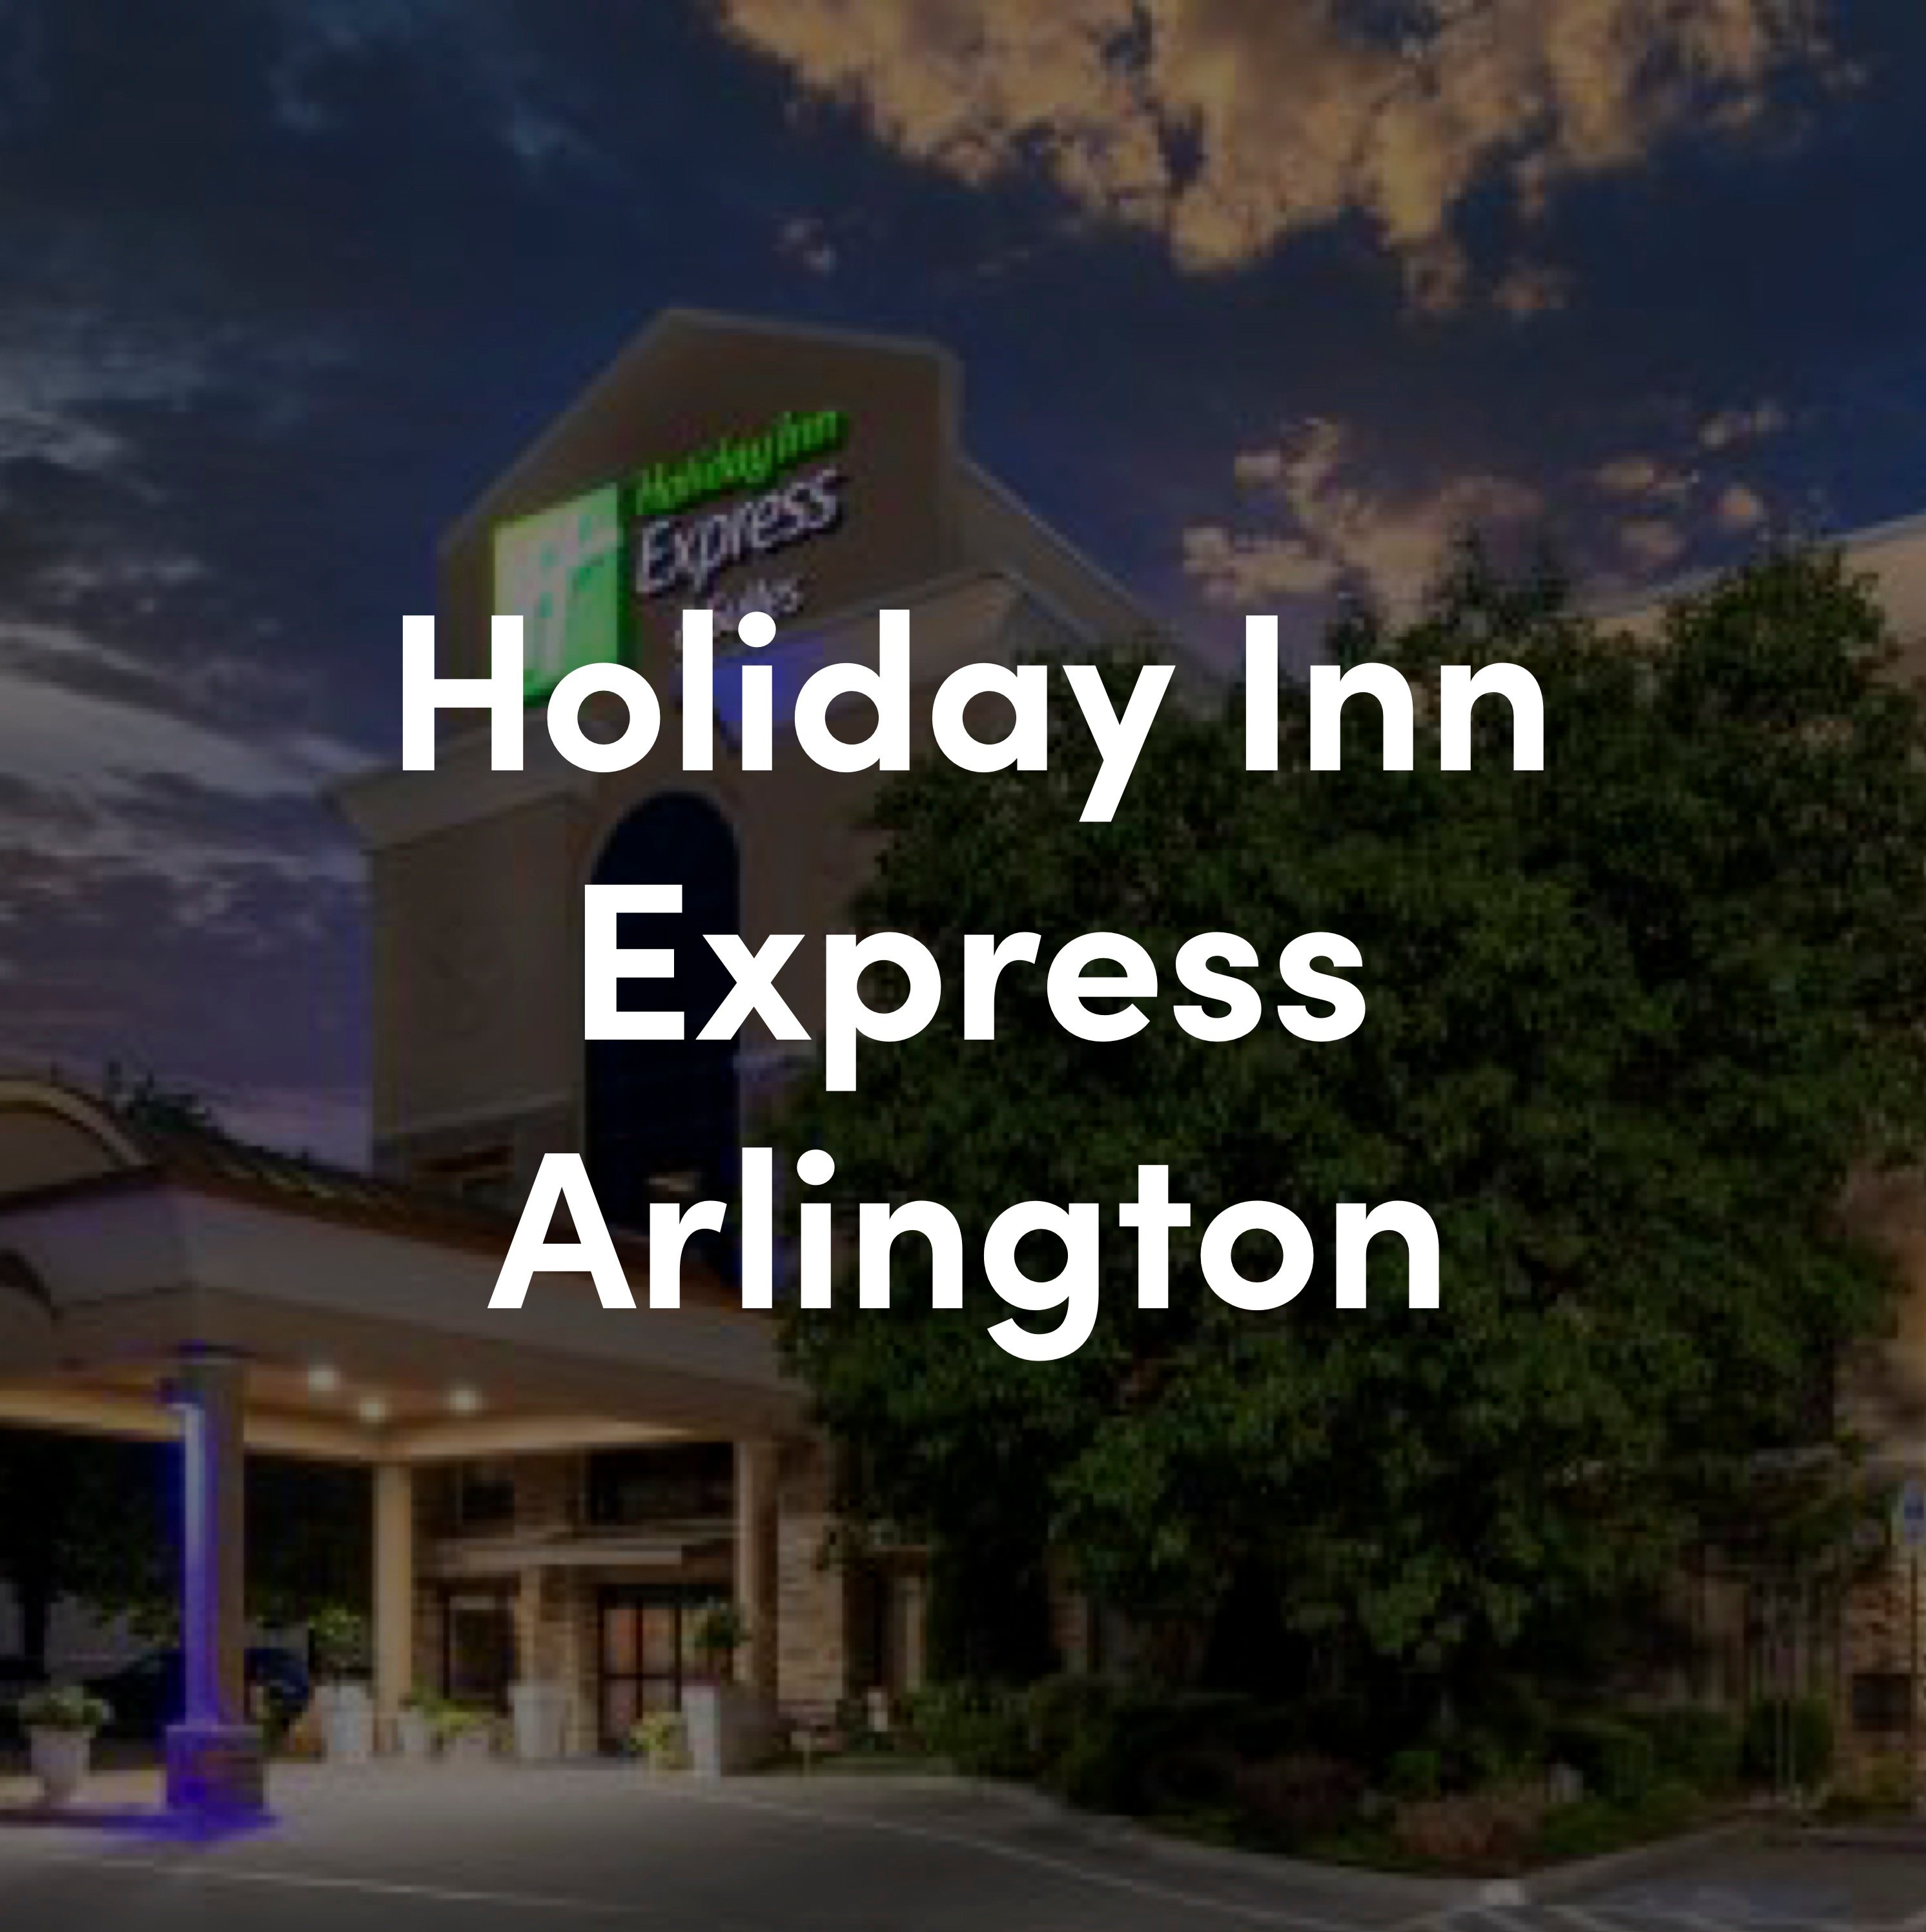 Holiday Inn Express Arlington